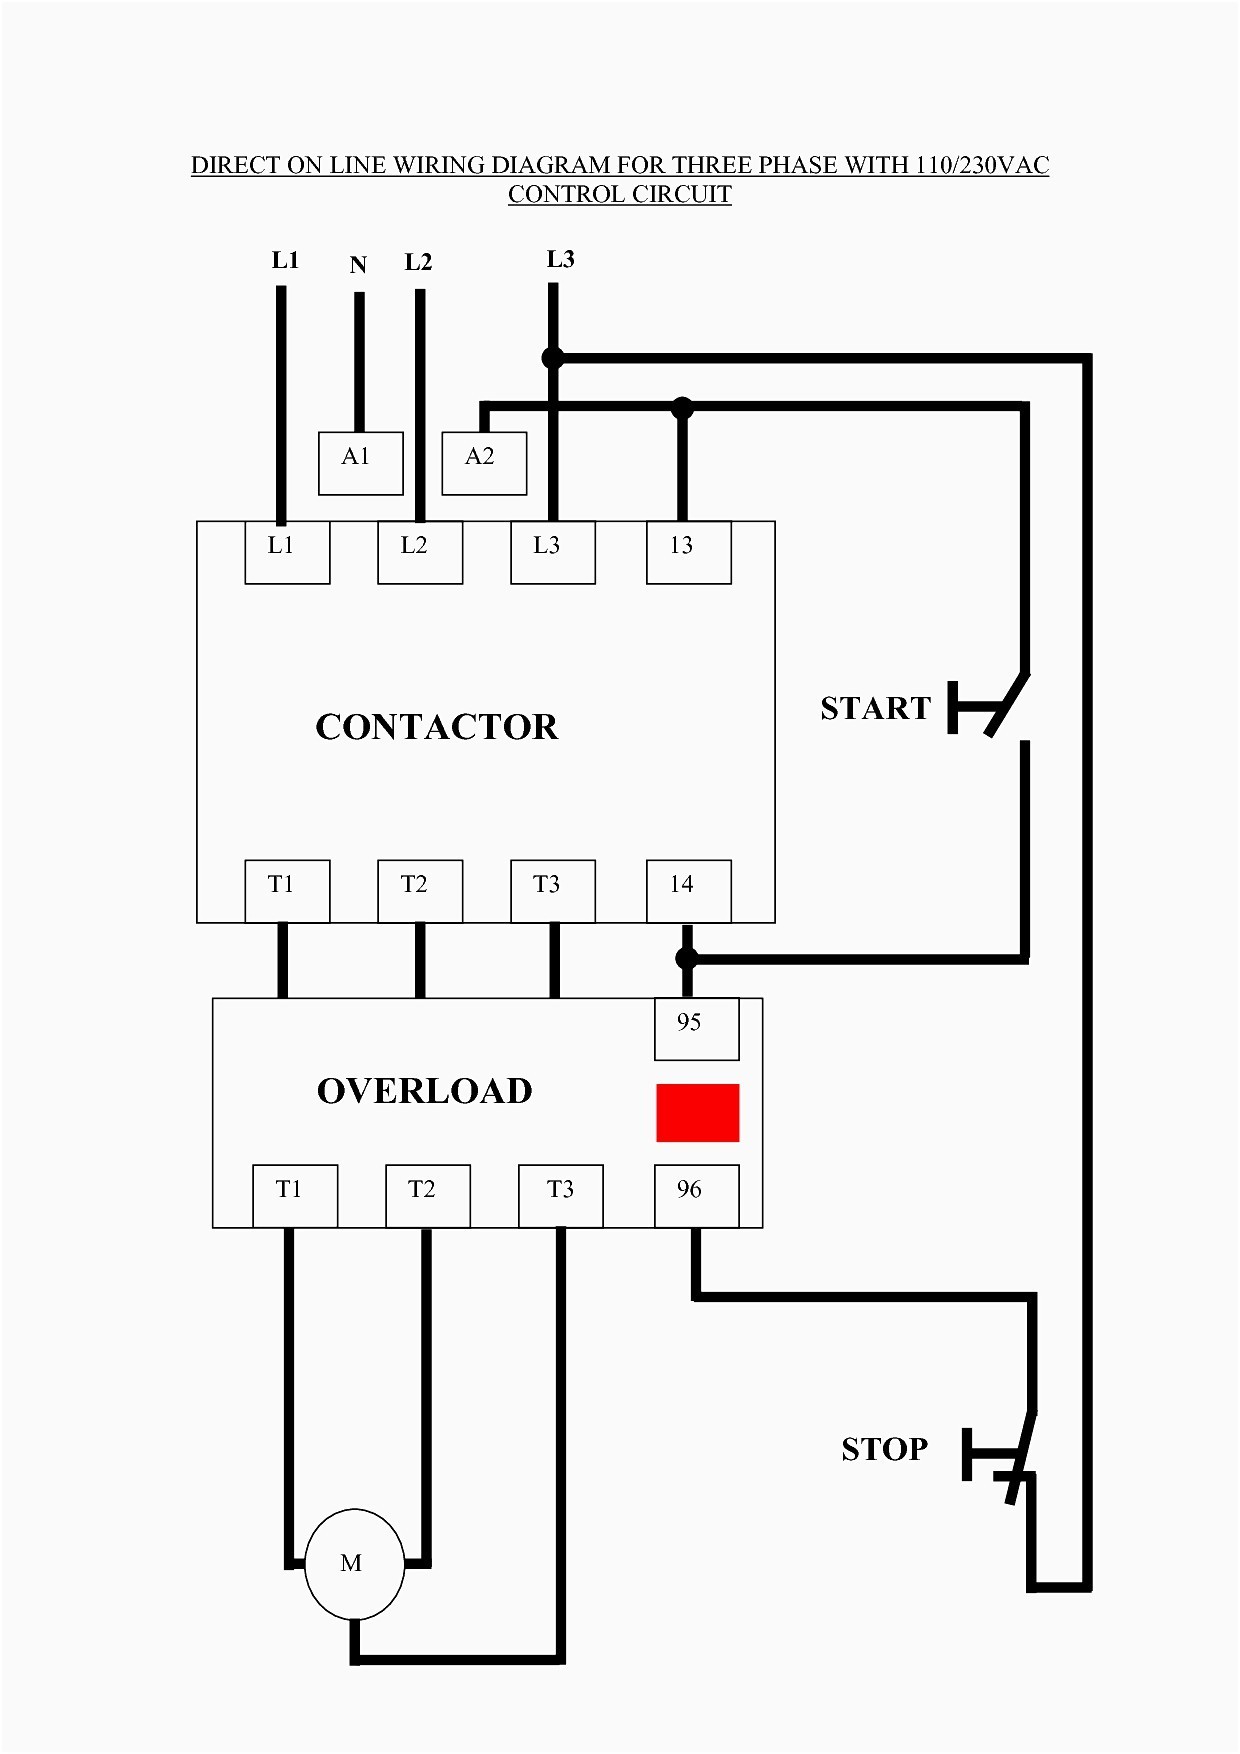 Circuit Diagram Contactor New Circuit Diagram Contactor Relay Save Contactor Hot Neutral Wiring